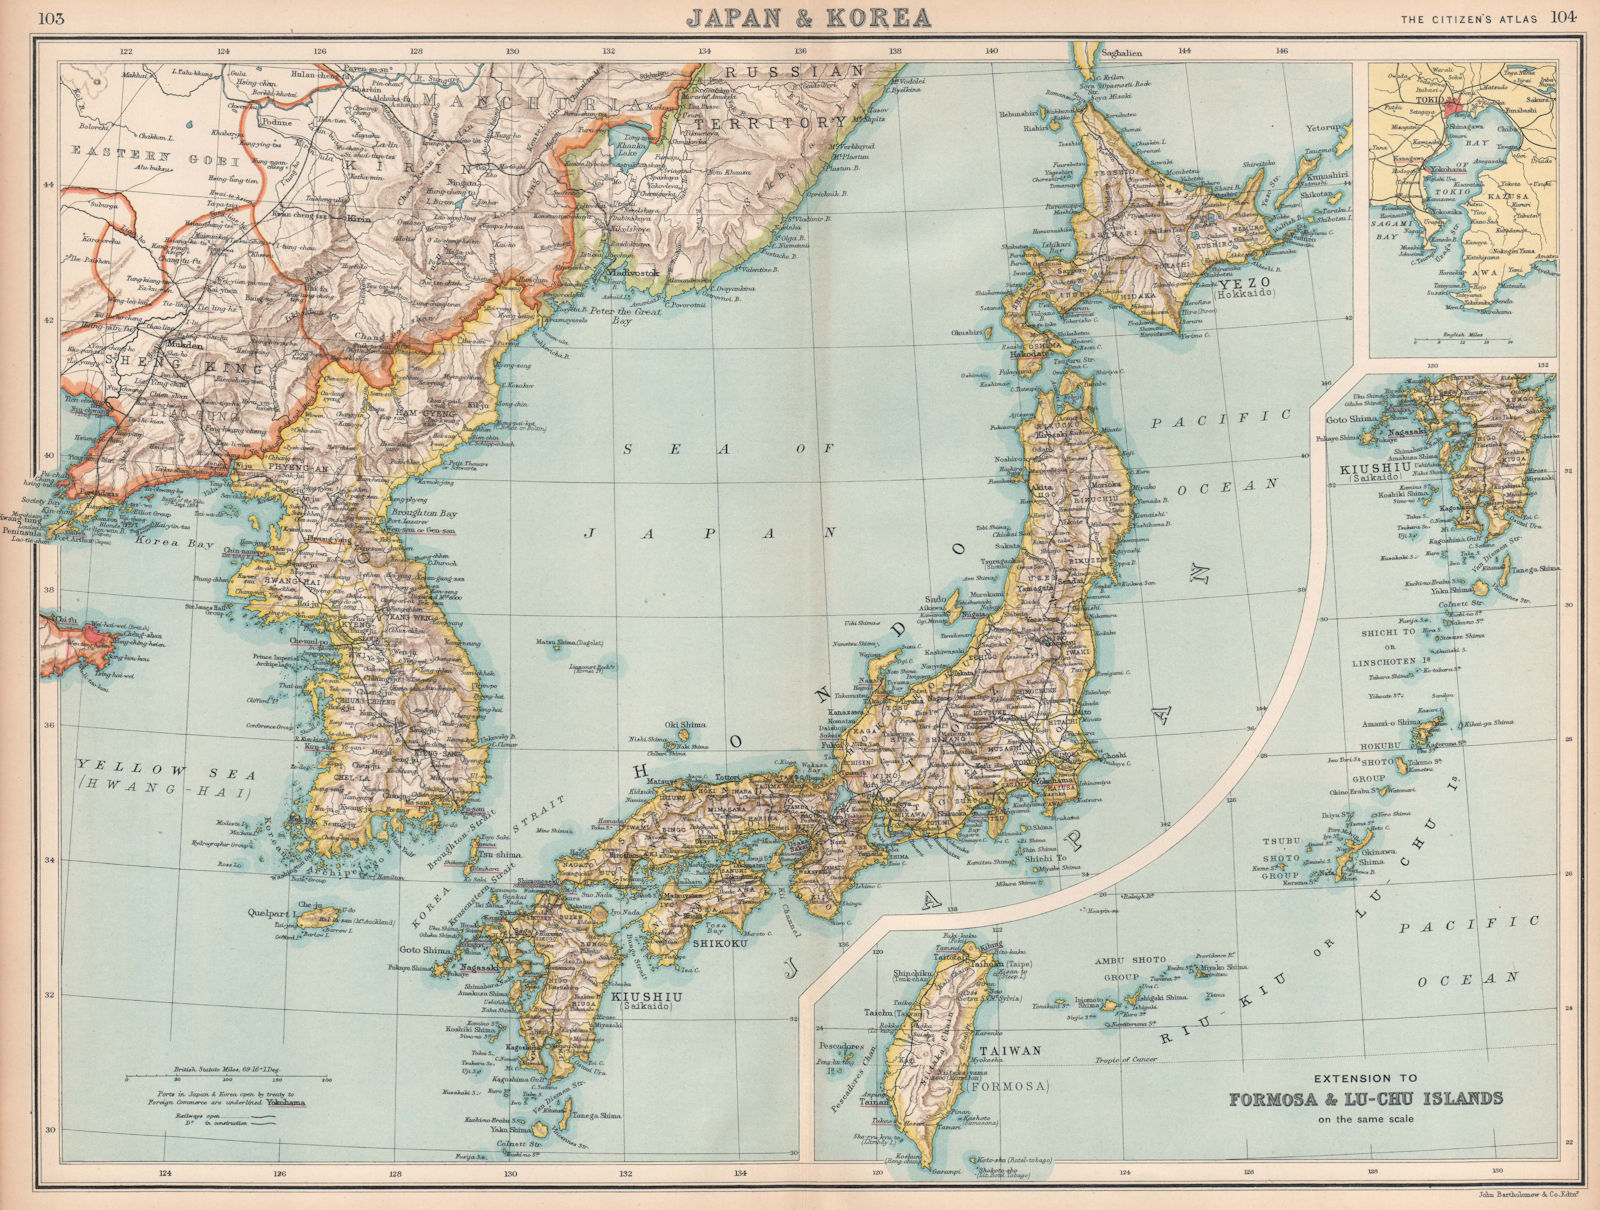 JAPAN & KOREA. Inset Tokyo bay. Formosa Taiwan. Railways. BARTHOLOMEW 1912 map